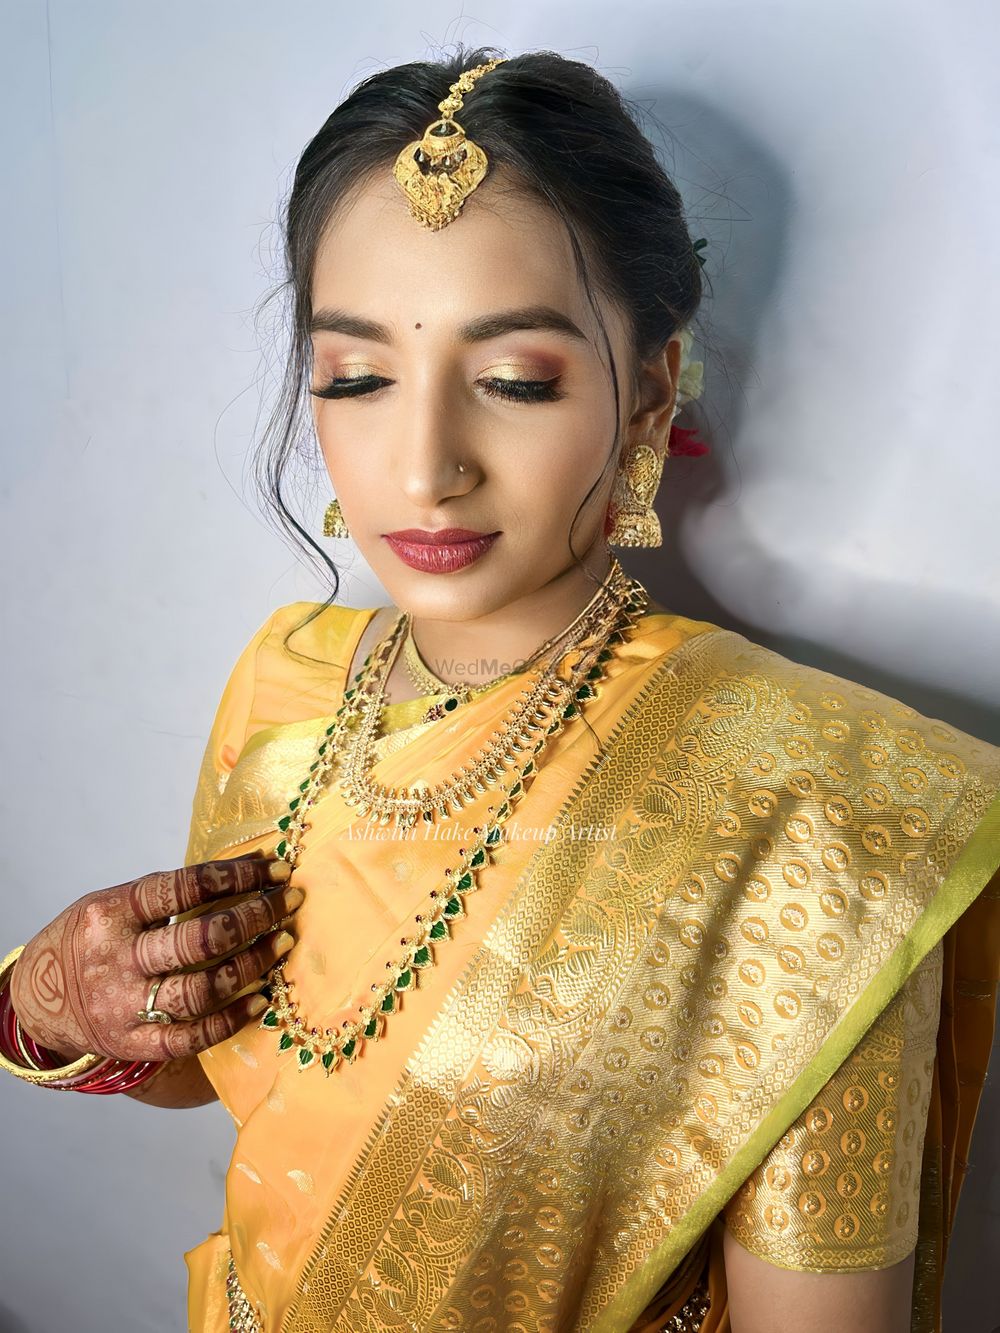 Photo By Ashwini Makeup Artist - Bridal Makeup